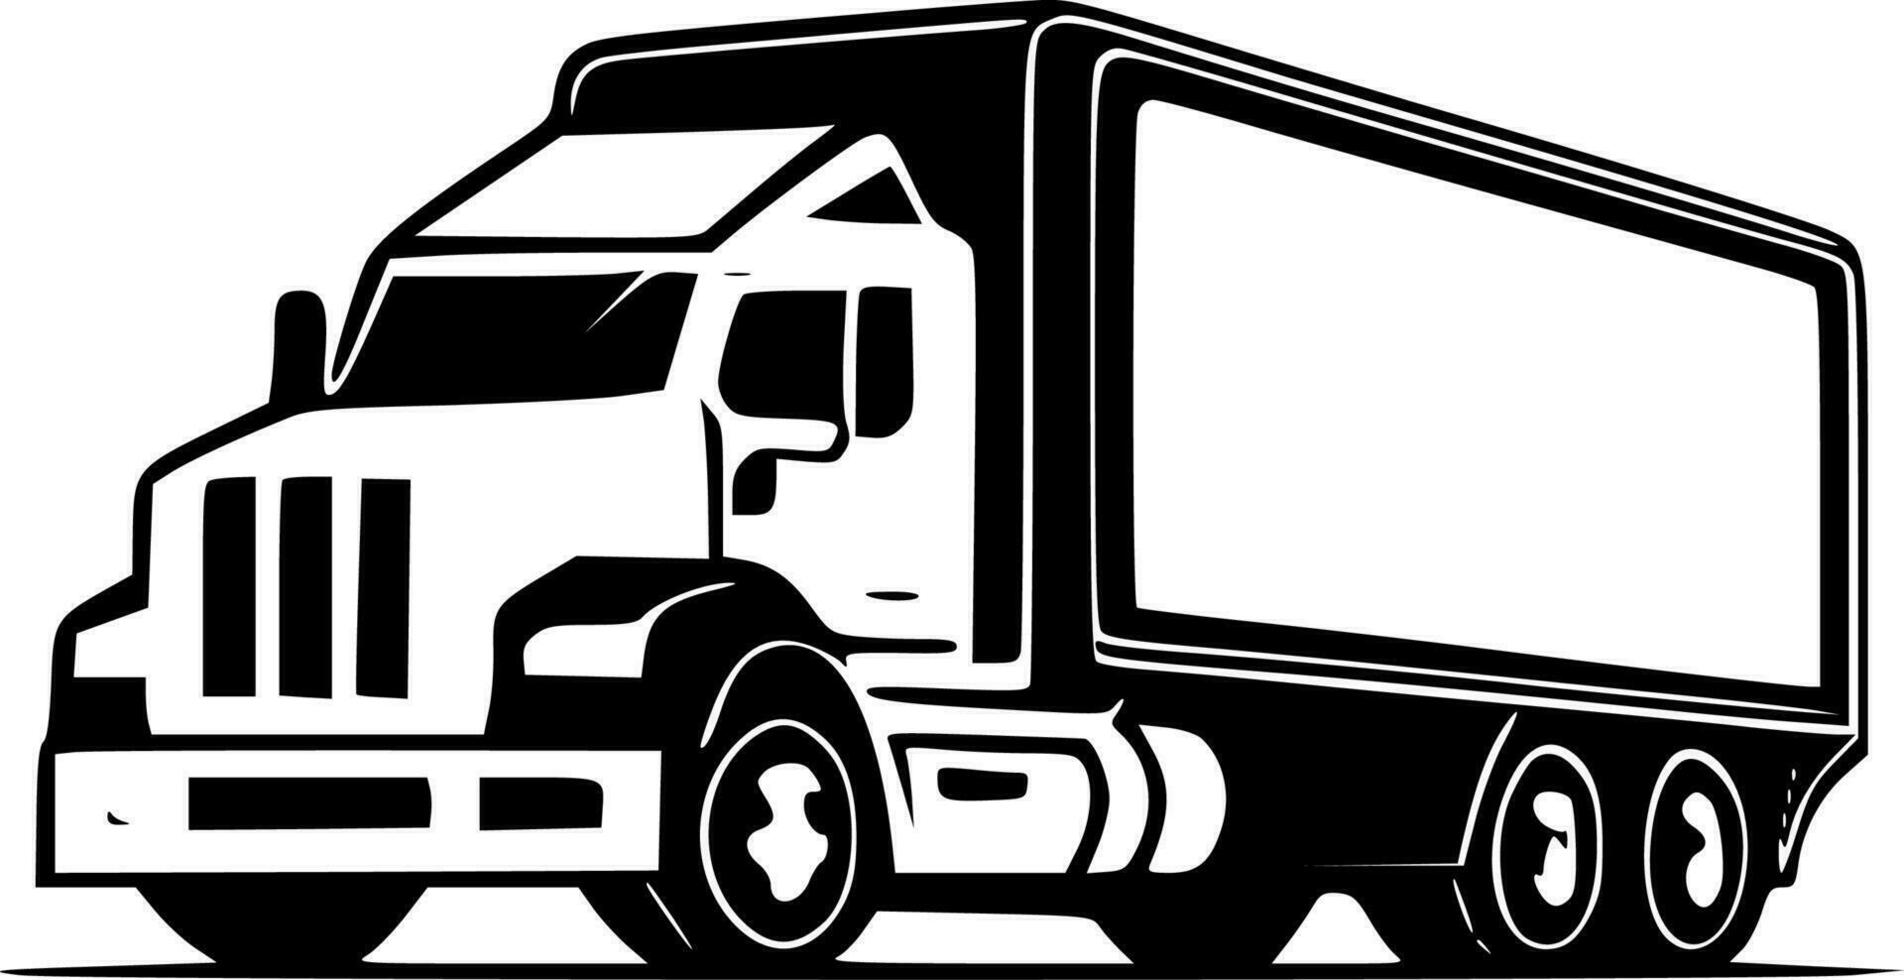 Truck, Black and White Vector illustration